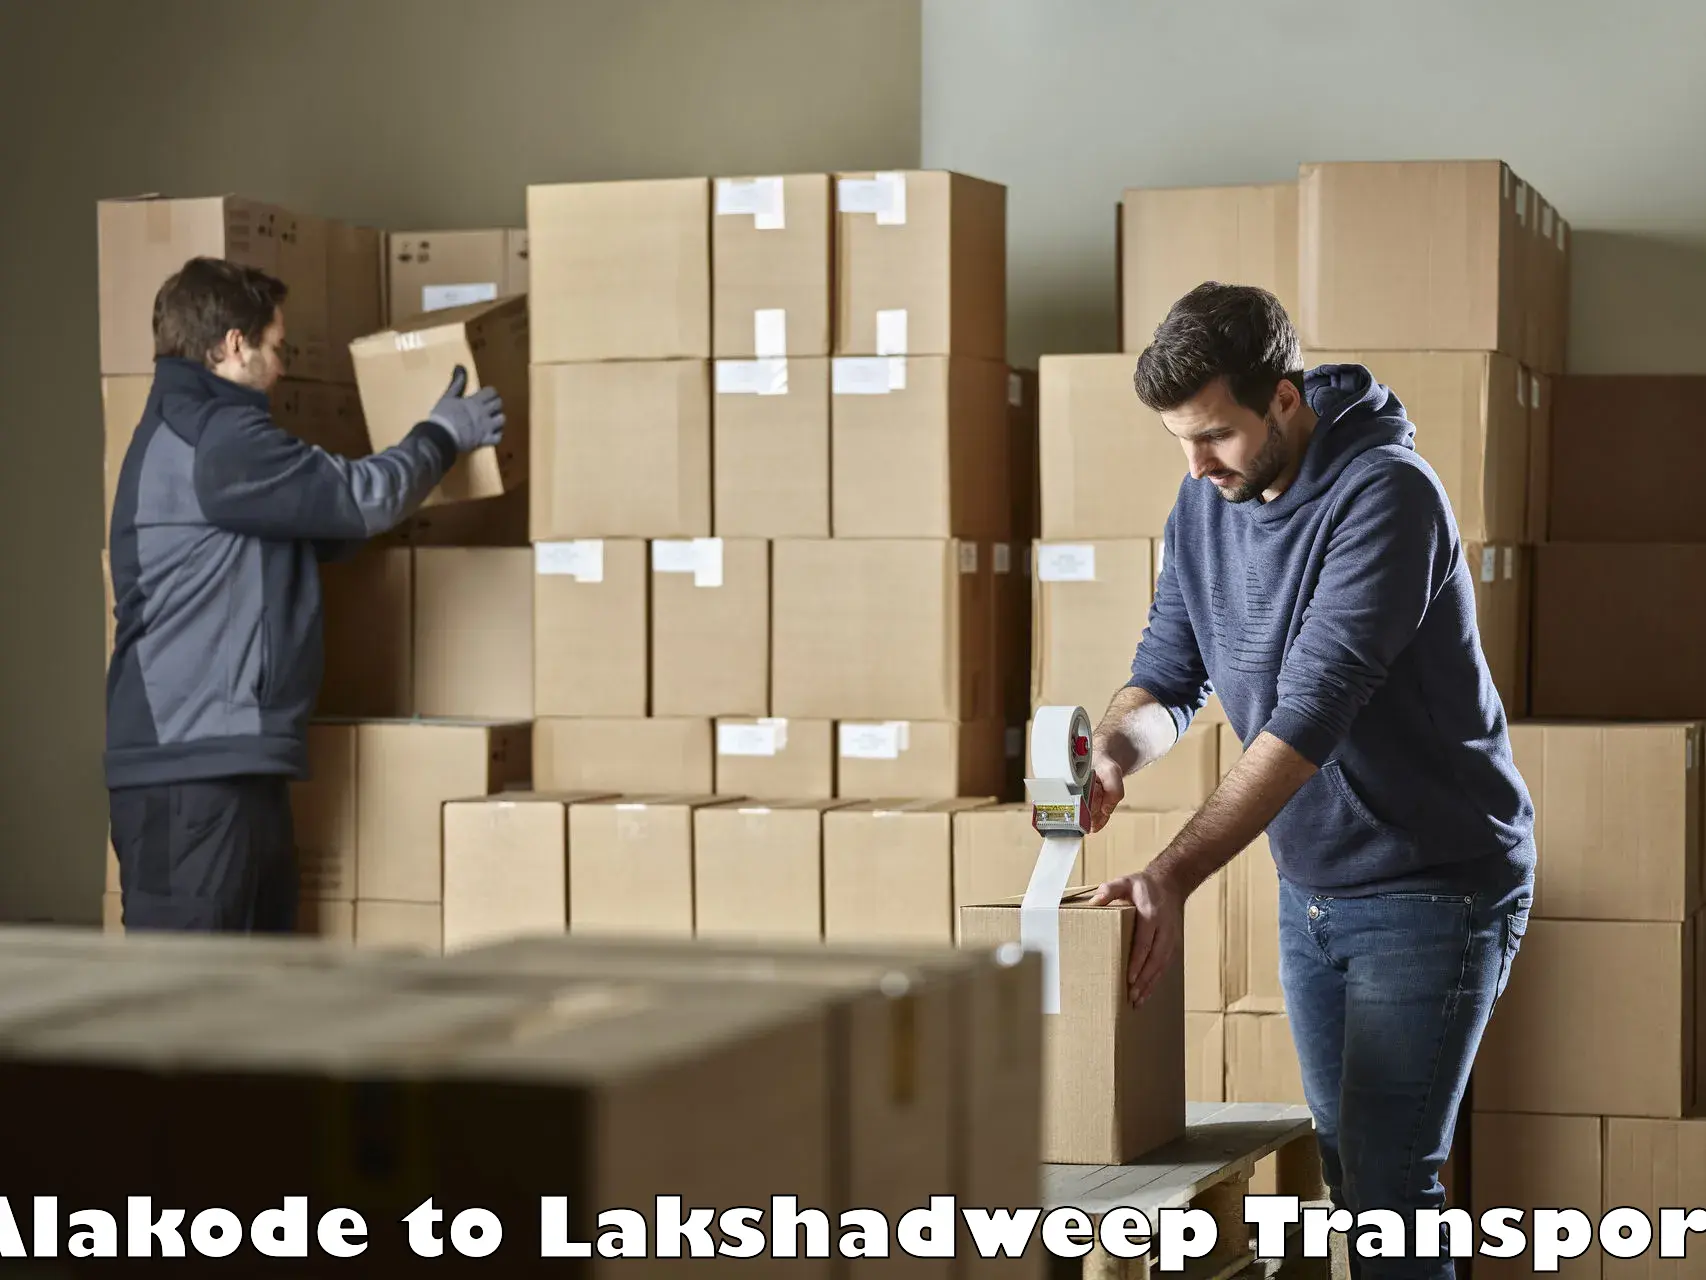 Daily transport service Alakode to Lakshadweep